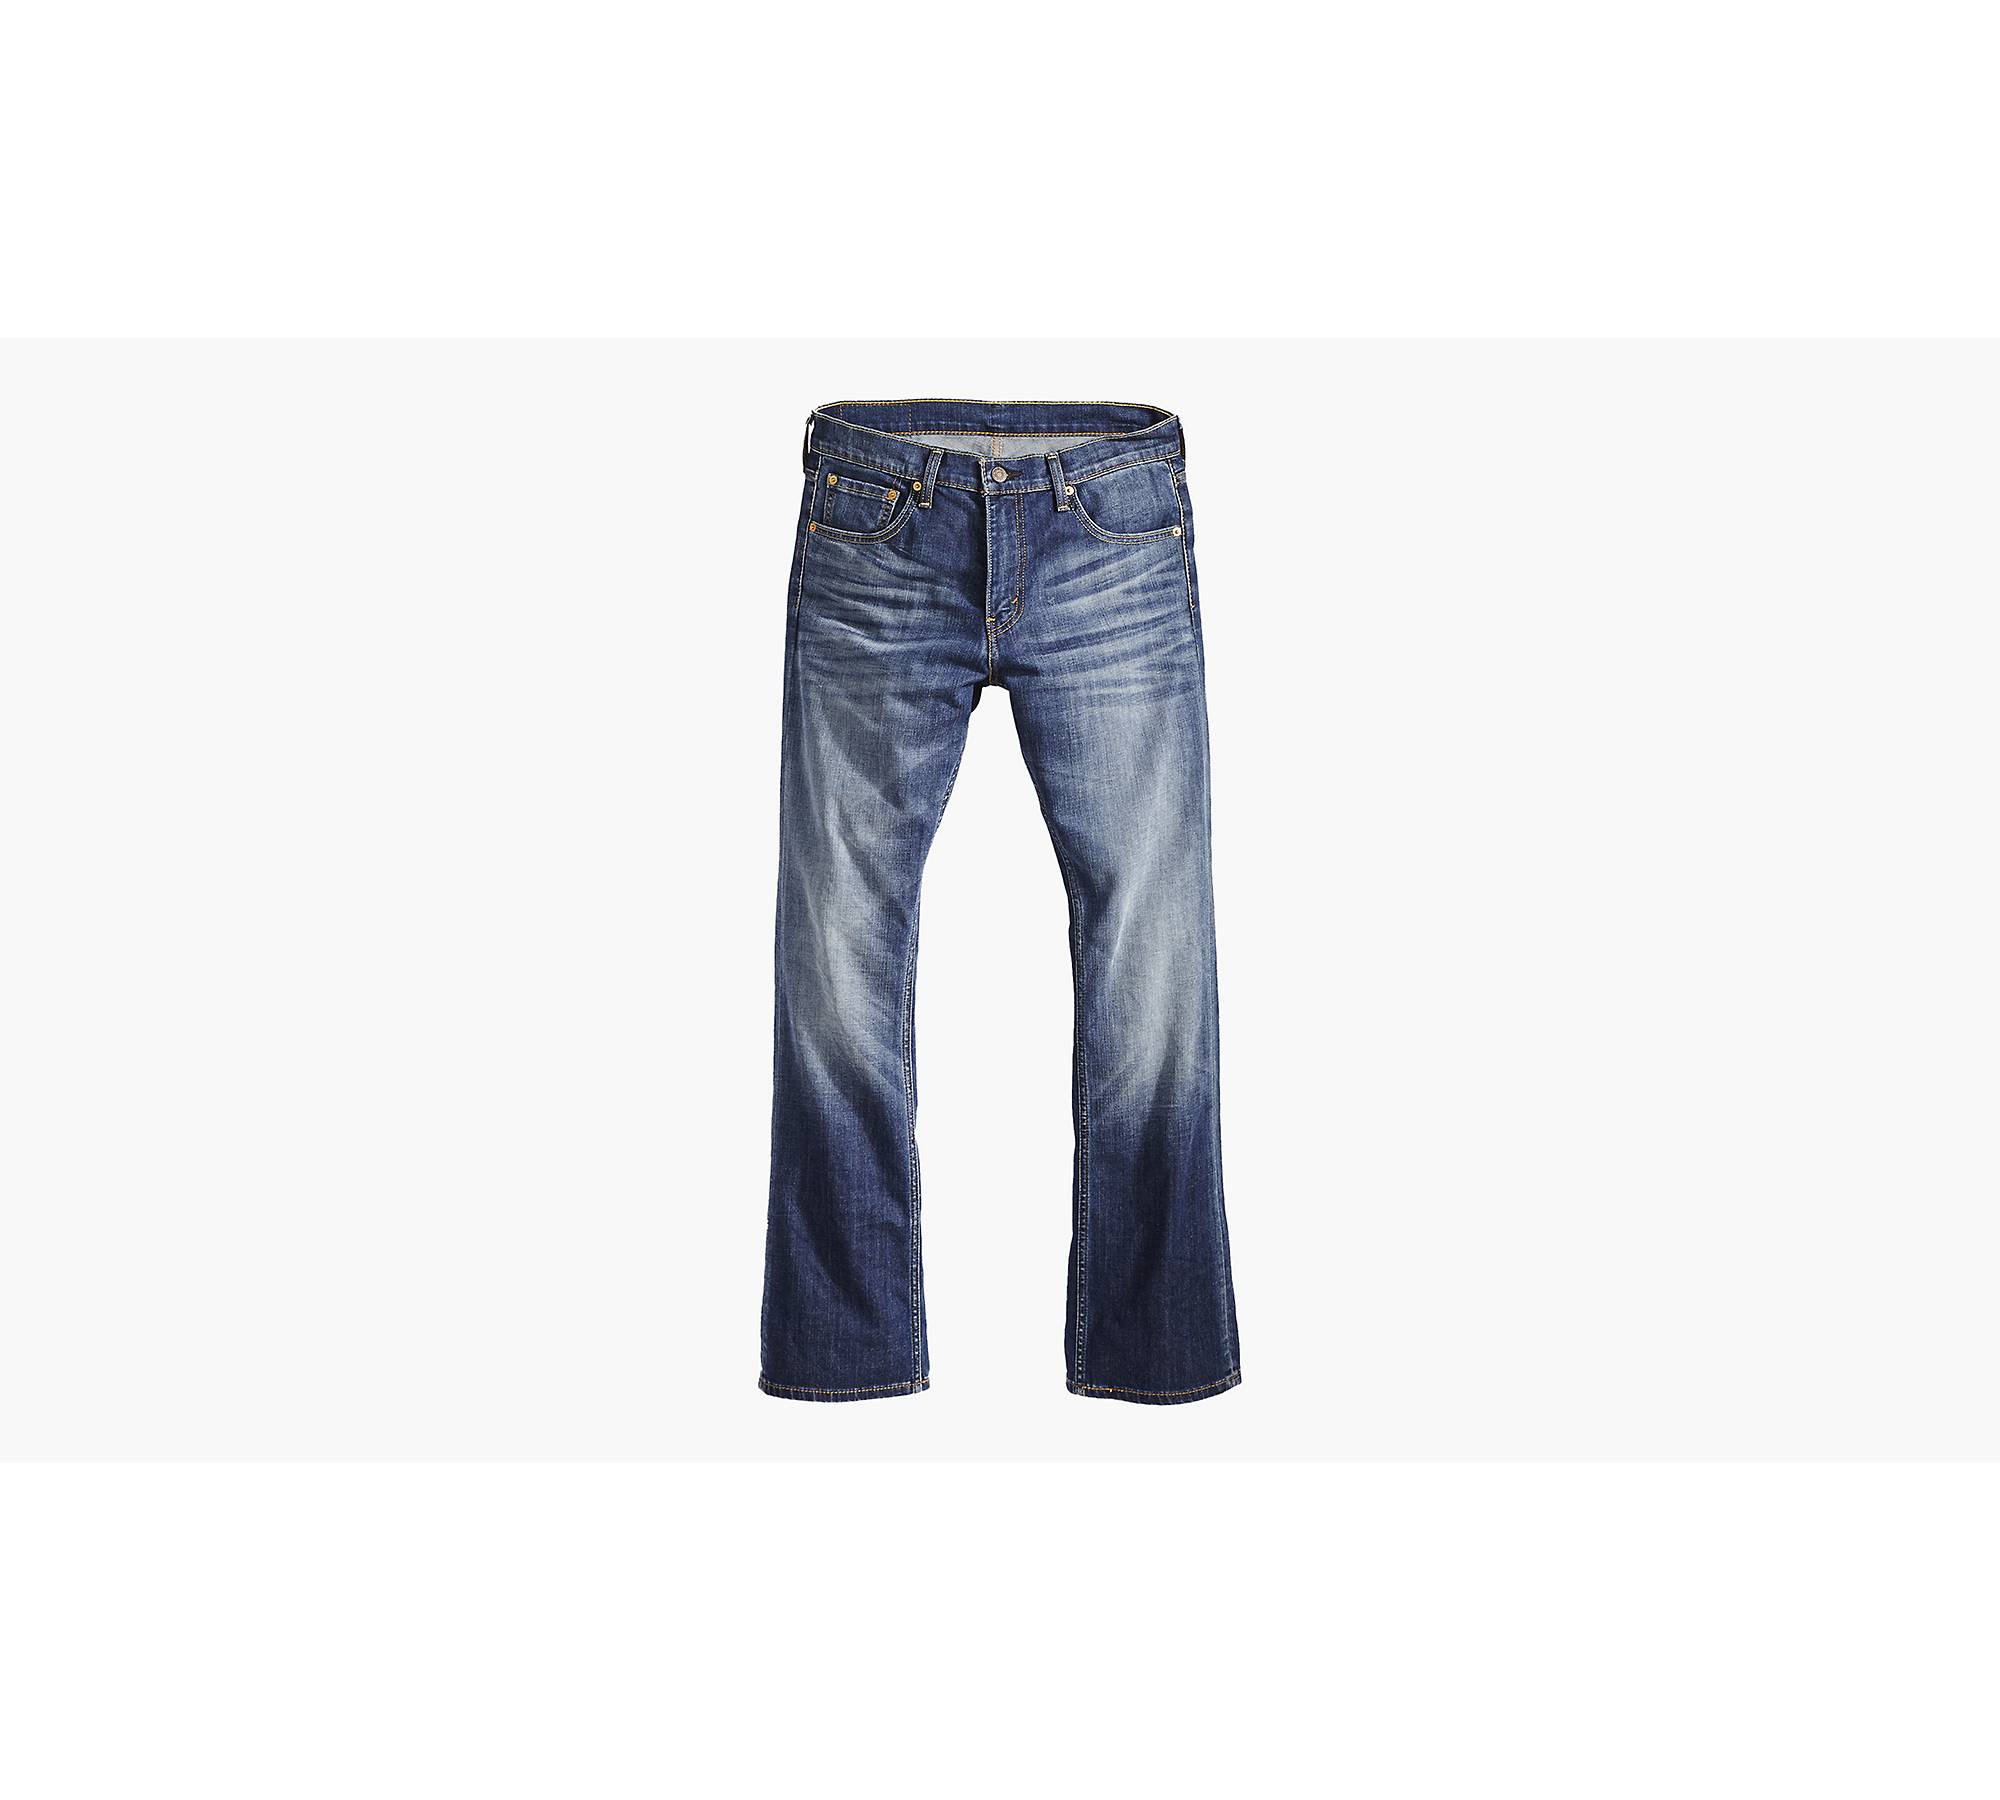 527™ Slim Boot Cut Jeans - Dark Wash